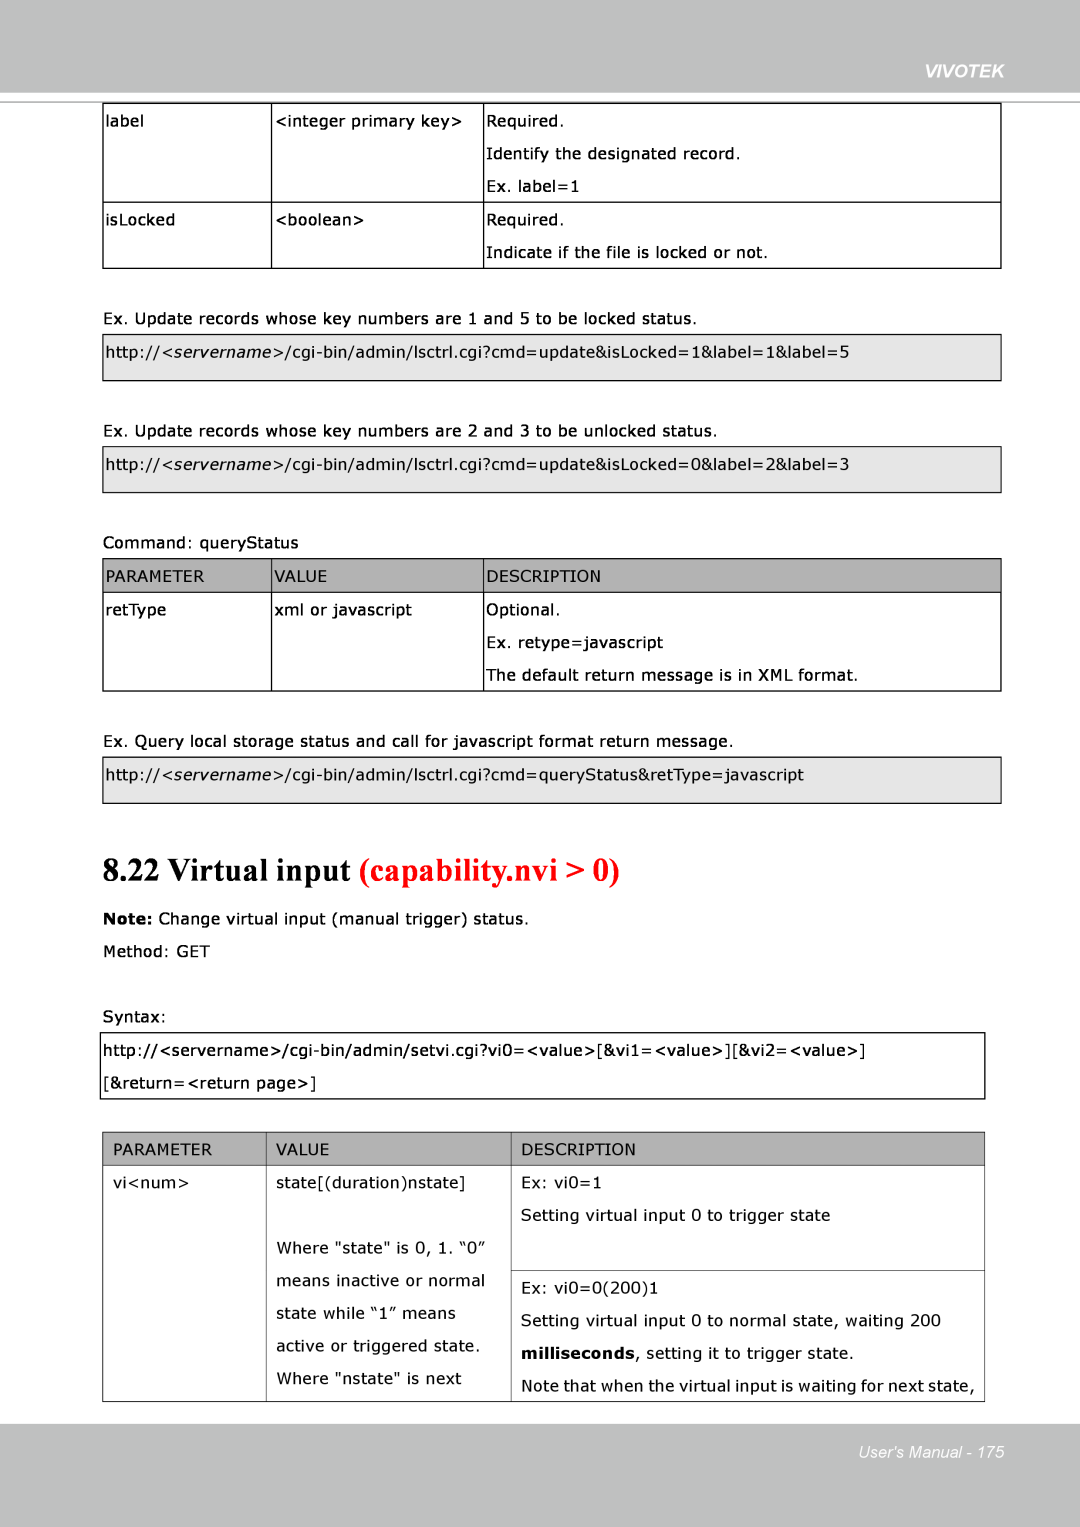 Vivotek IP8352 manual Virtual input capability.nvi >, Vivotek, Users Manual 